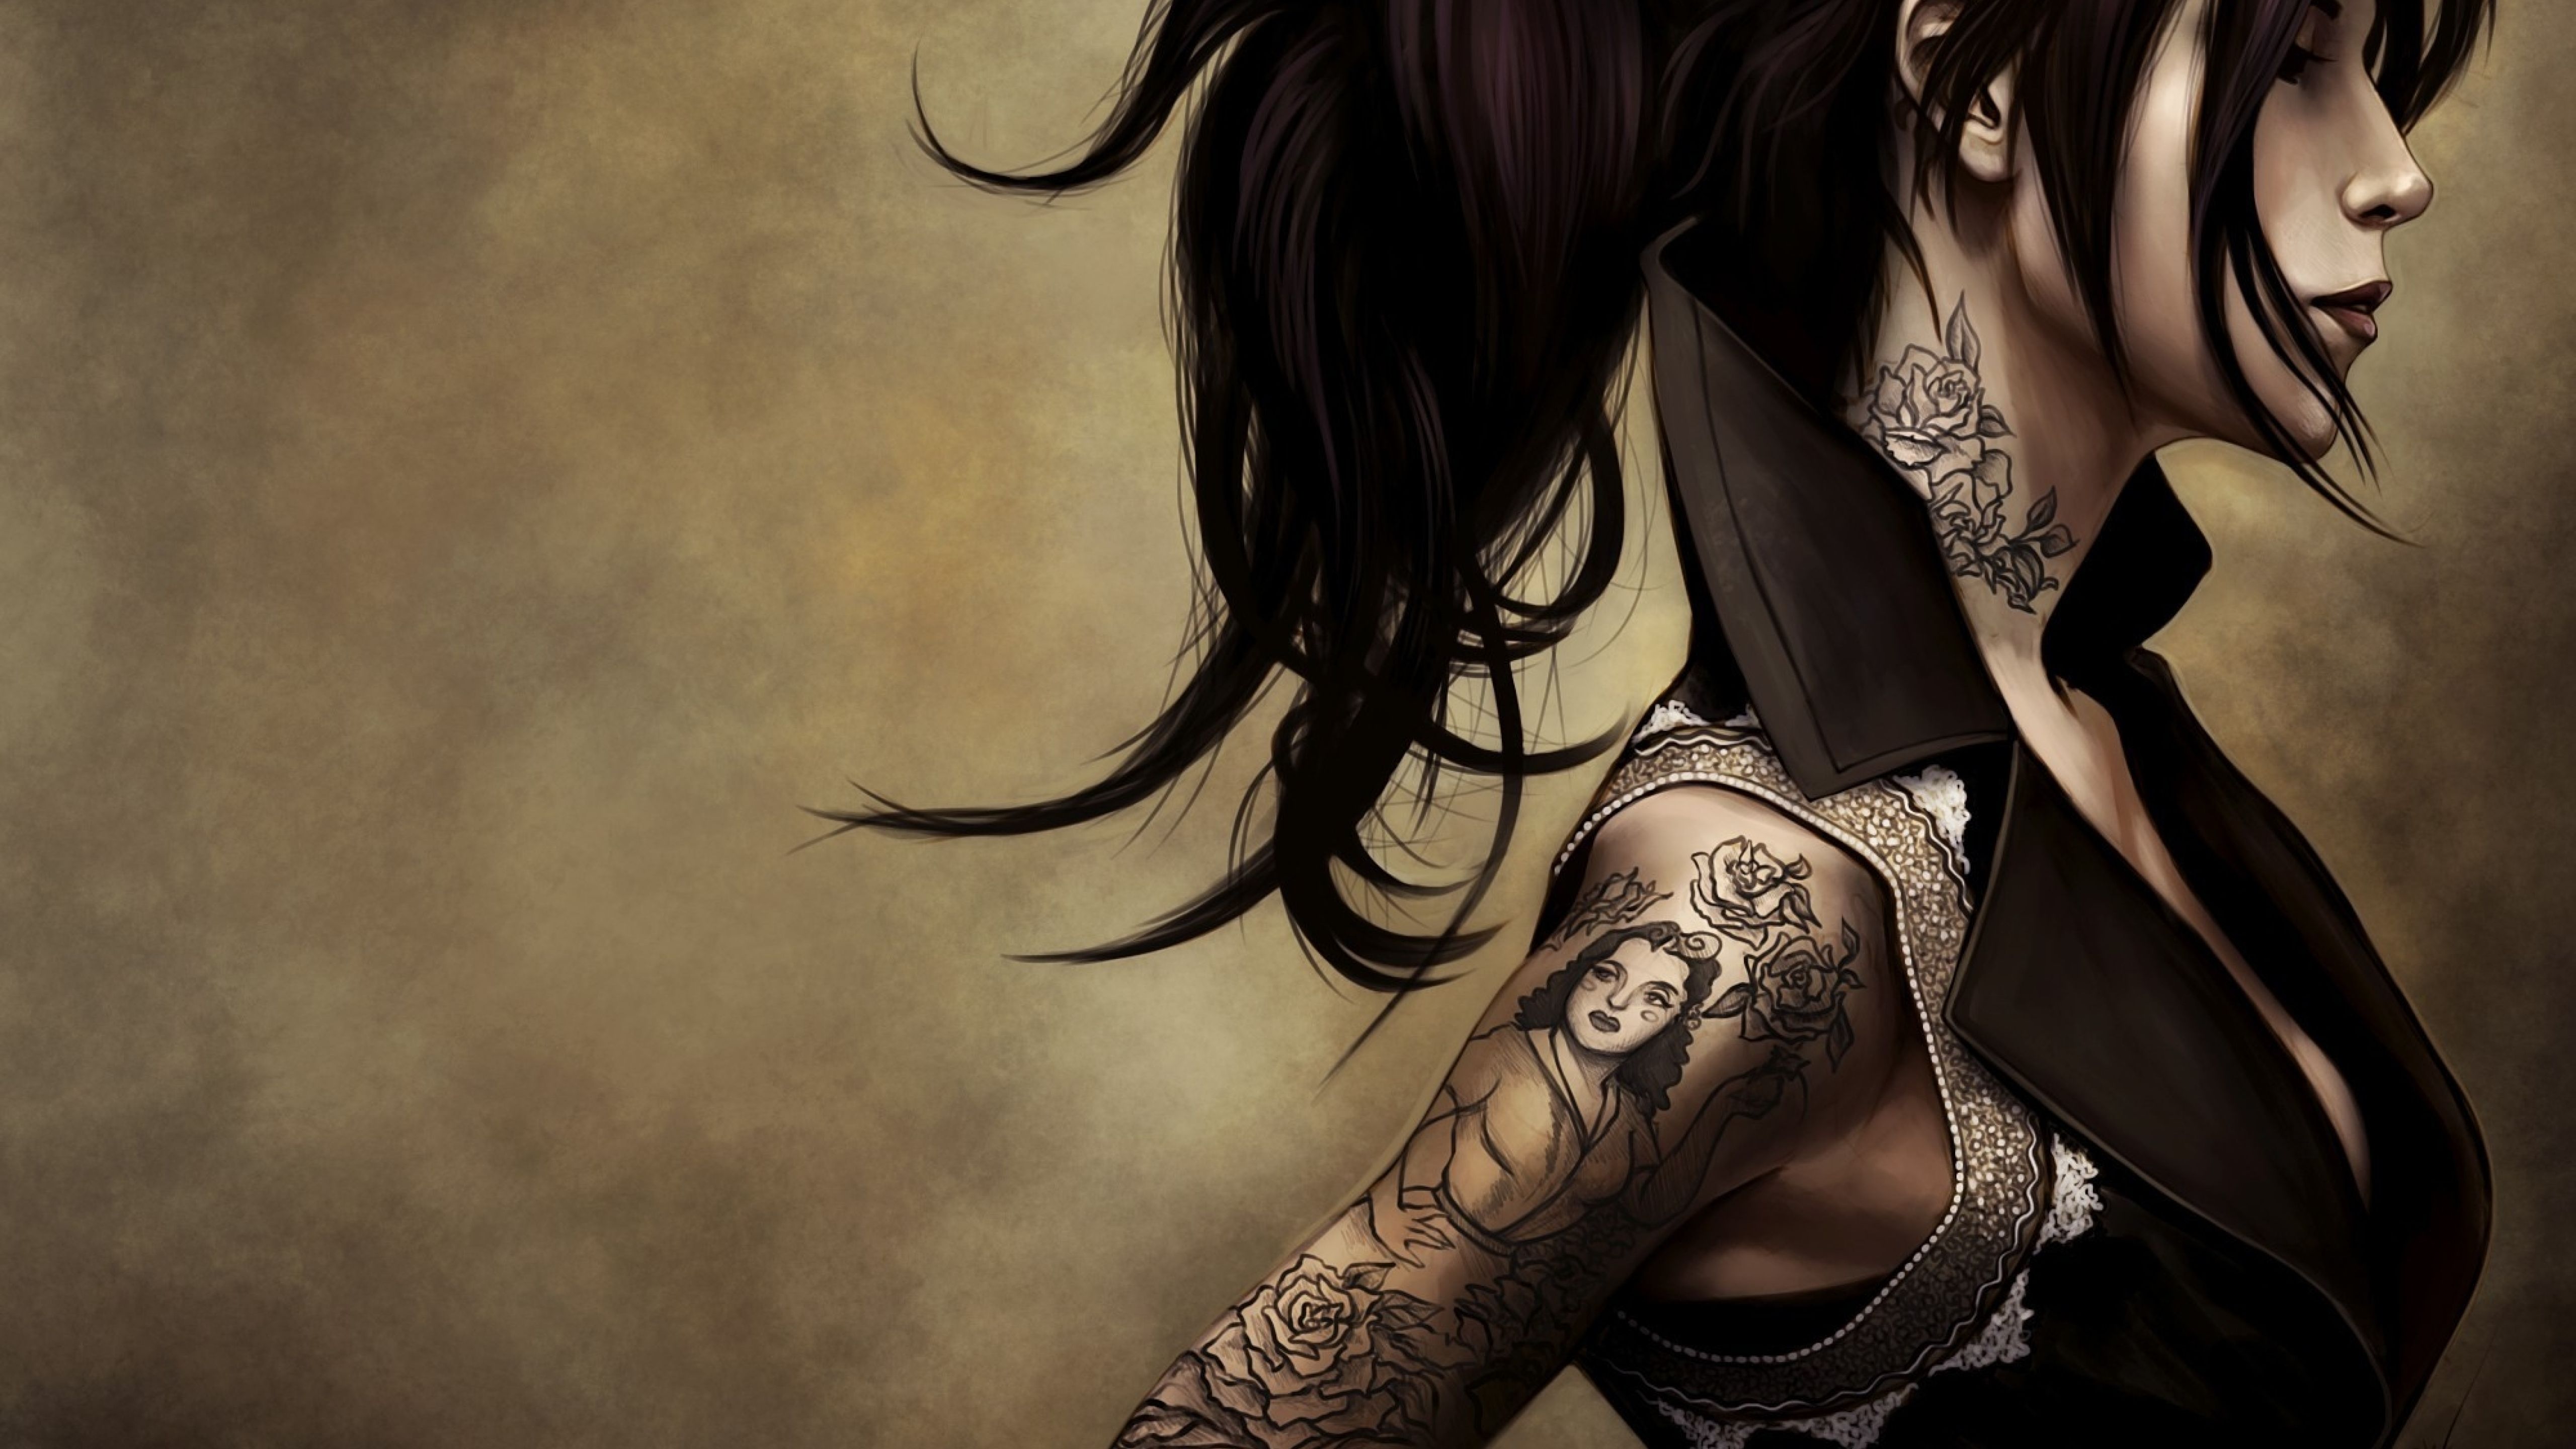 girl, profile, tattoos 5K Wallpaper, HD Fantasy 4K Wallpaper, Image, Photo and Background